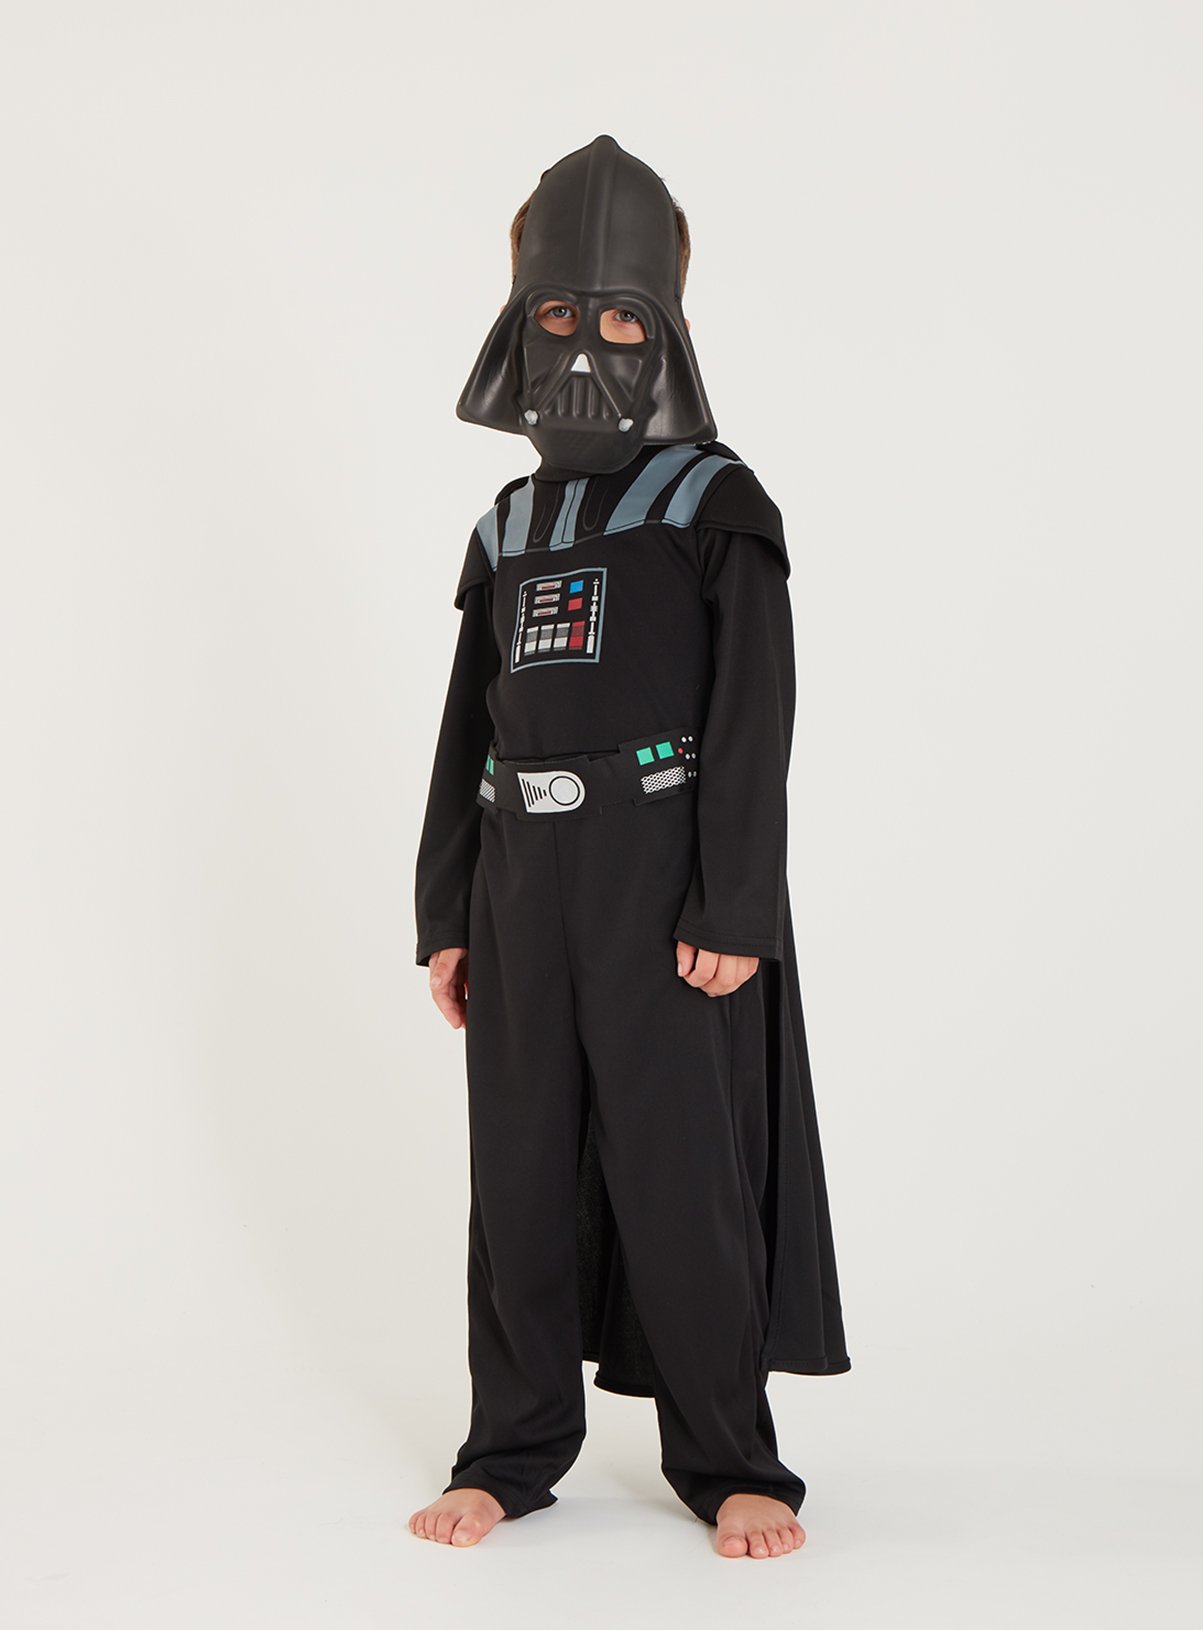 Star Wars Darth Vader Costume 9-10 years Black Years